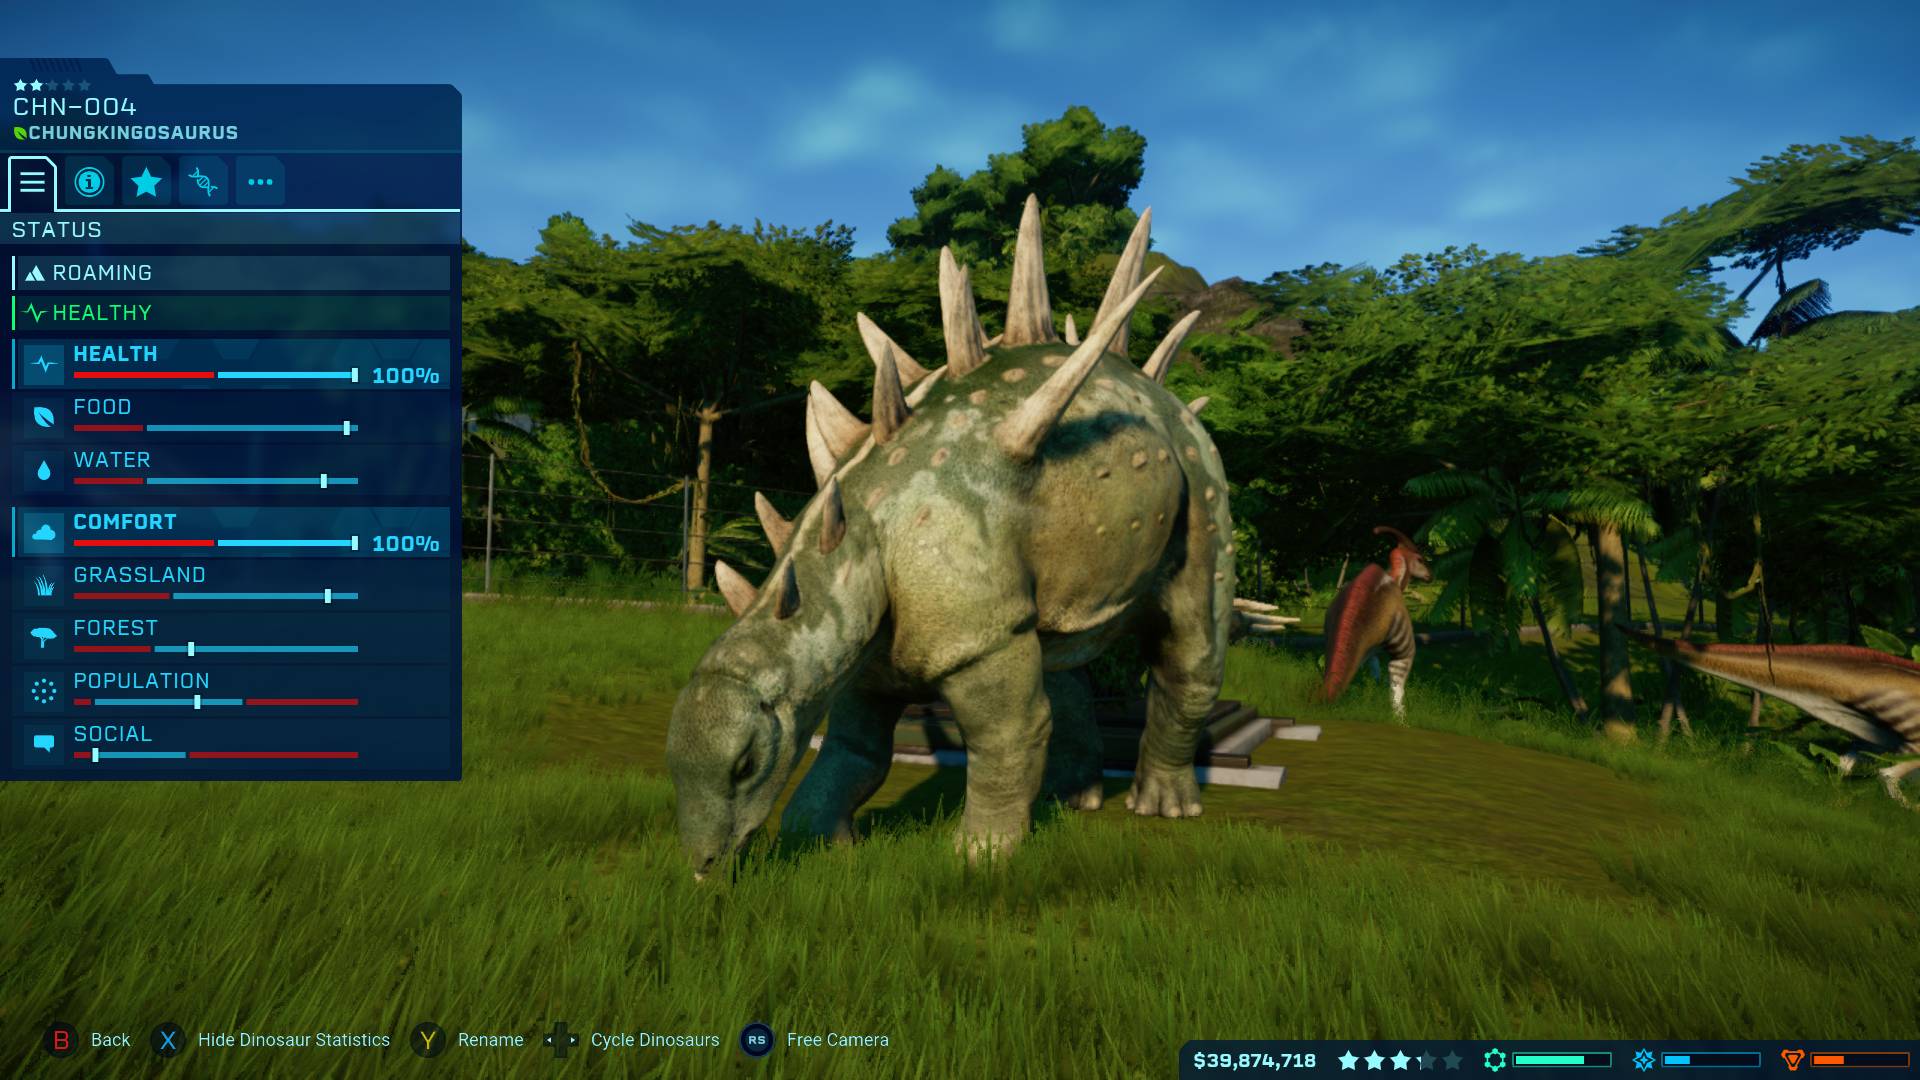 best dinosaur games: a dinosaur is shown grazing in an enclosure 